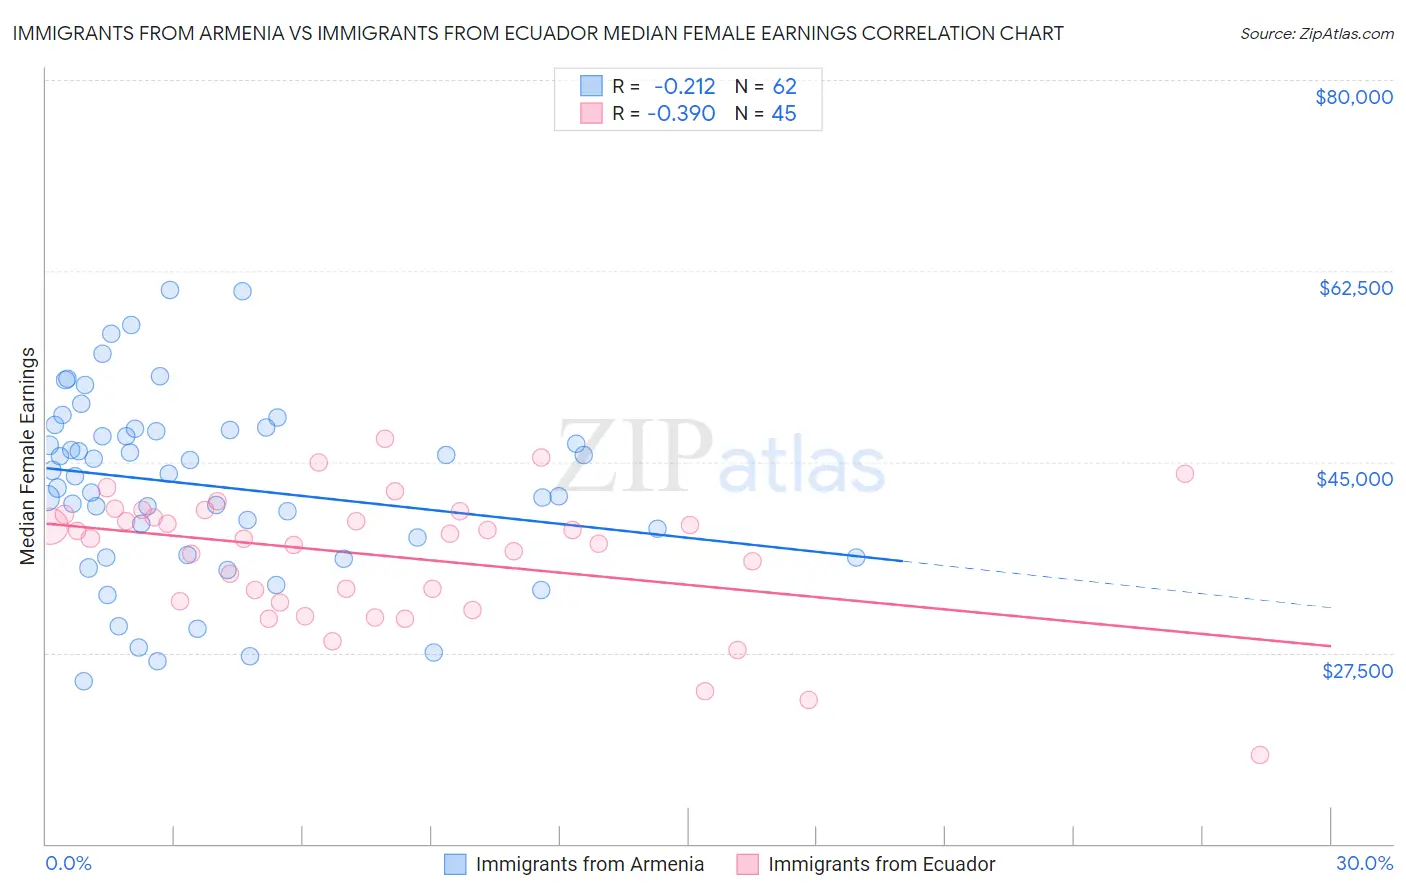 Immigrants from Armenia vs Immigrants from Ecuador Median Female Earnings